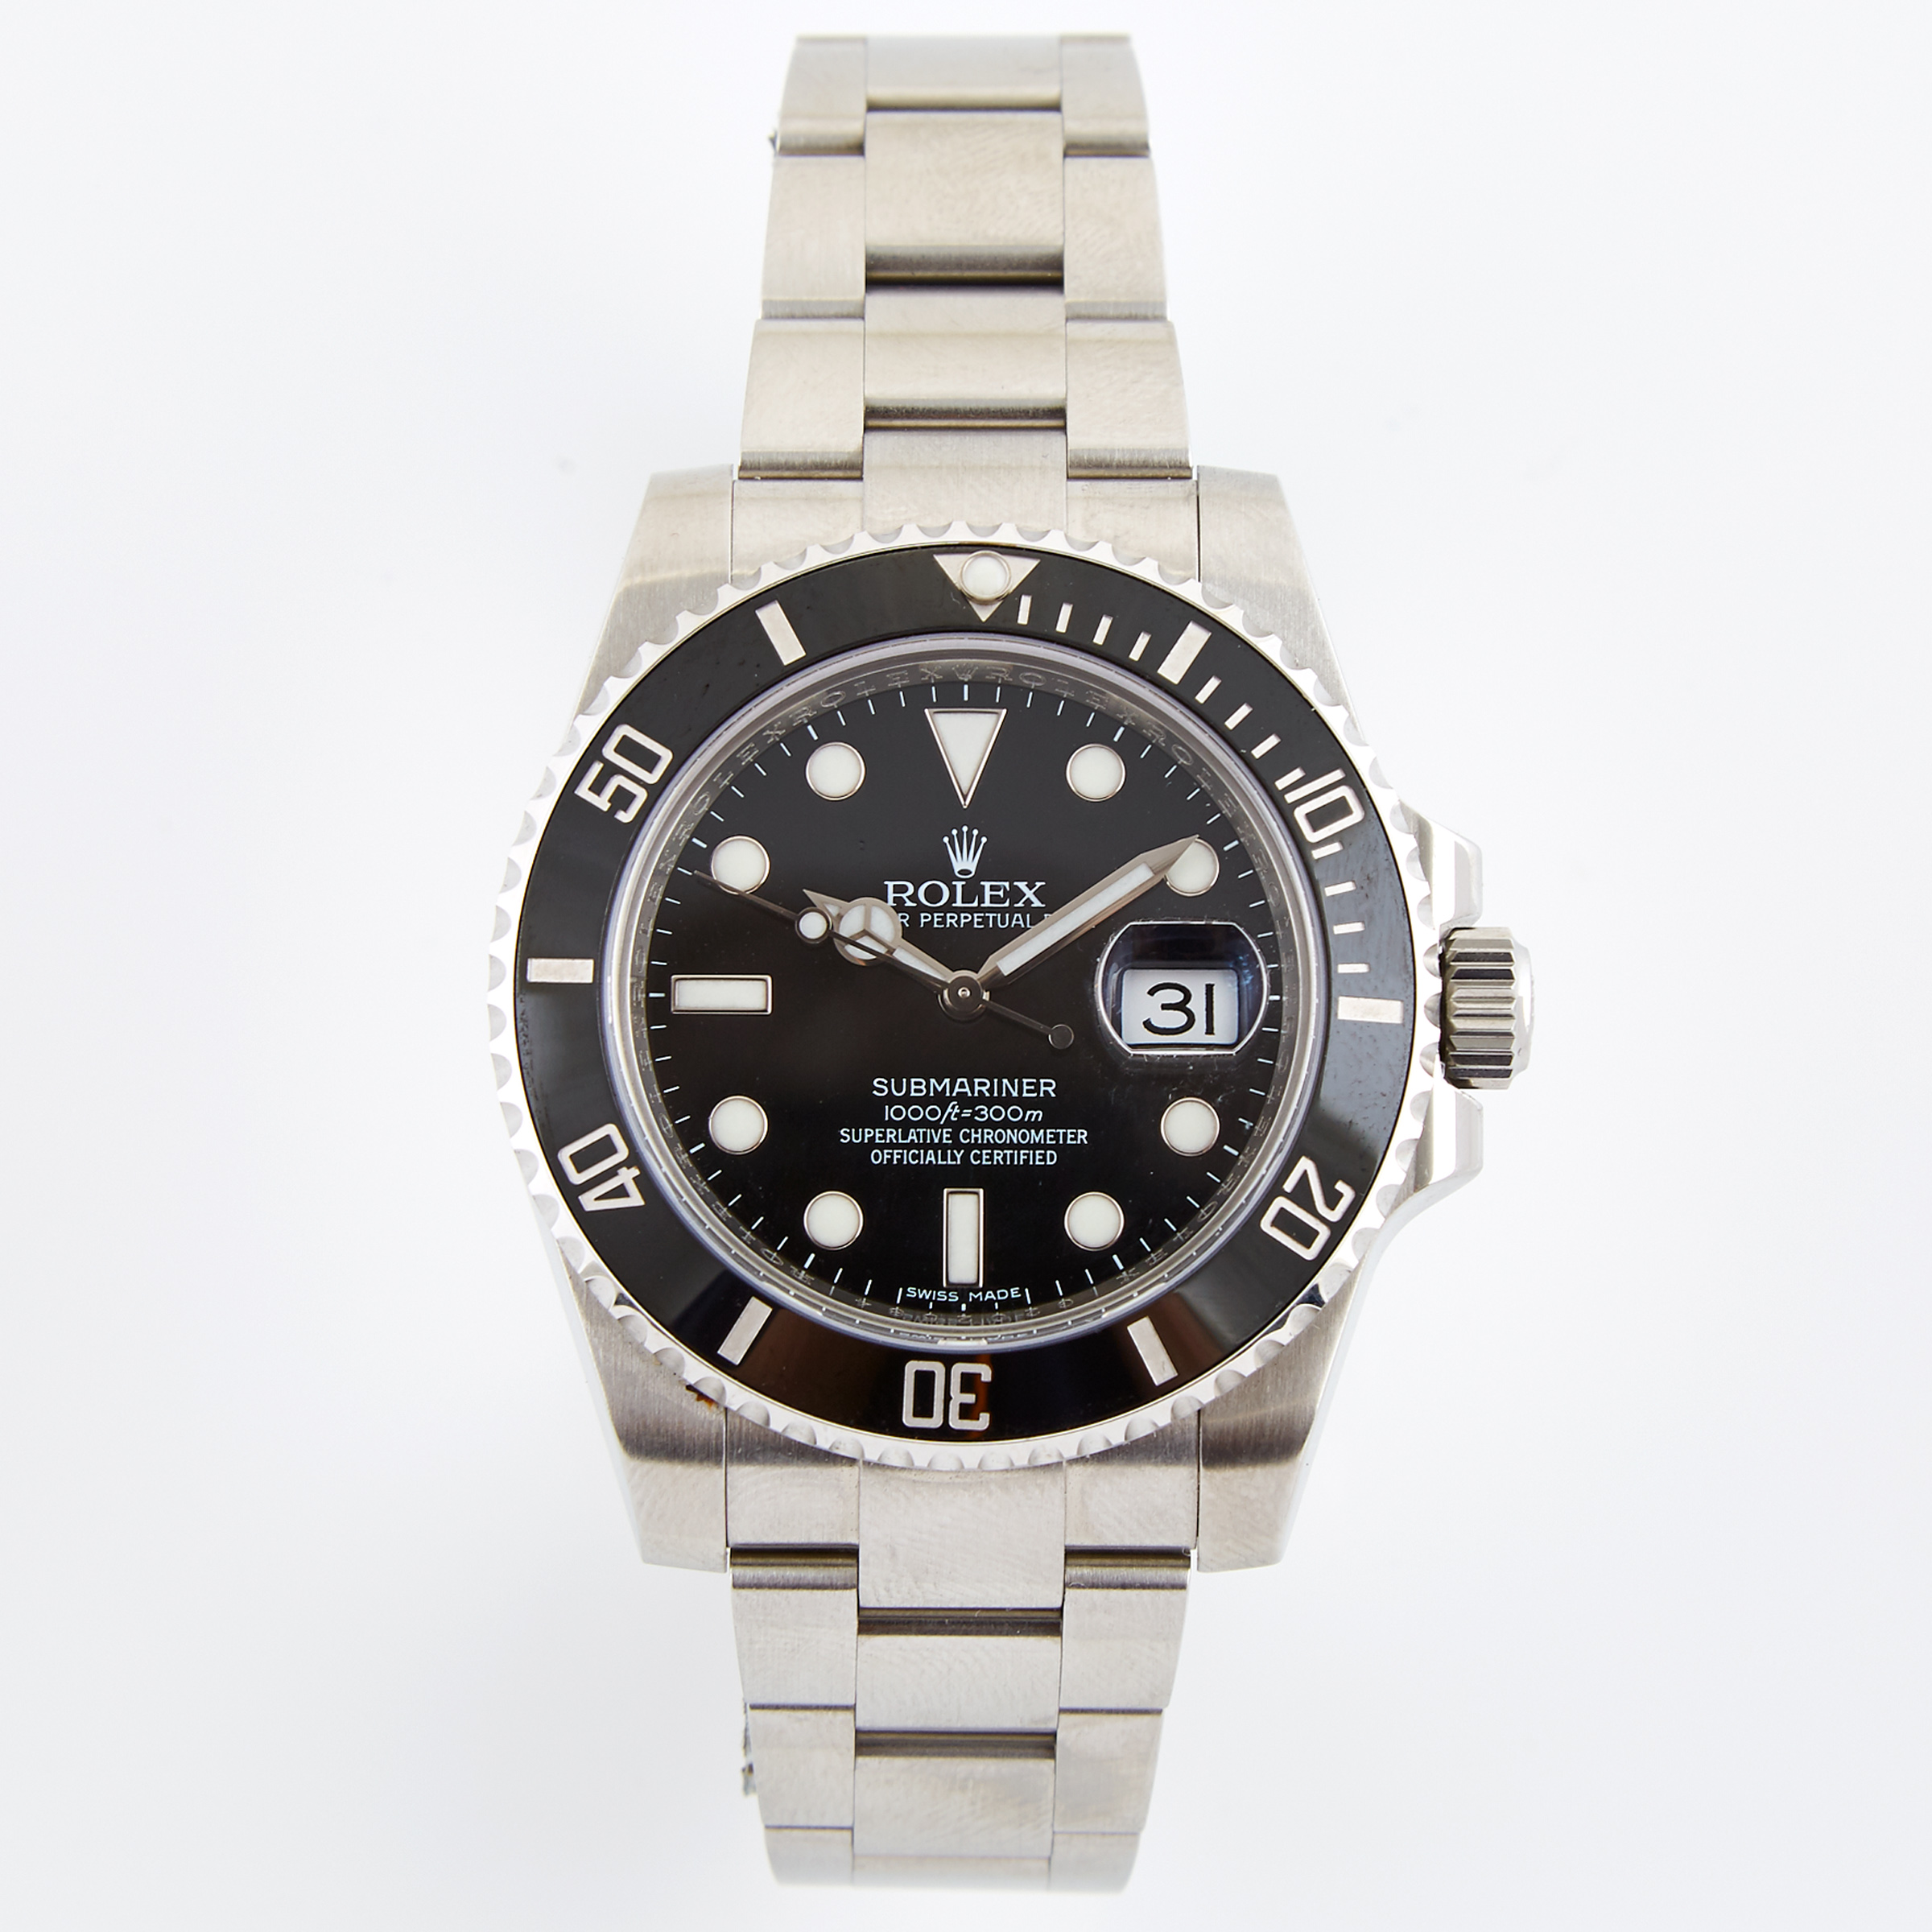 Men’s Rolex Oyster Perpetual Date Submariner Wristwatch